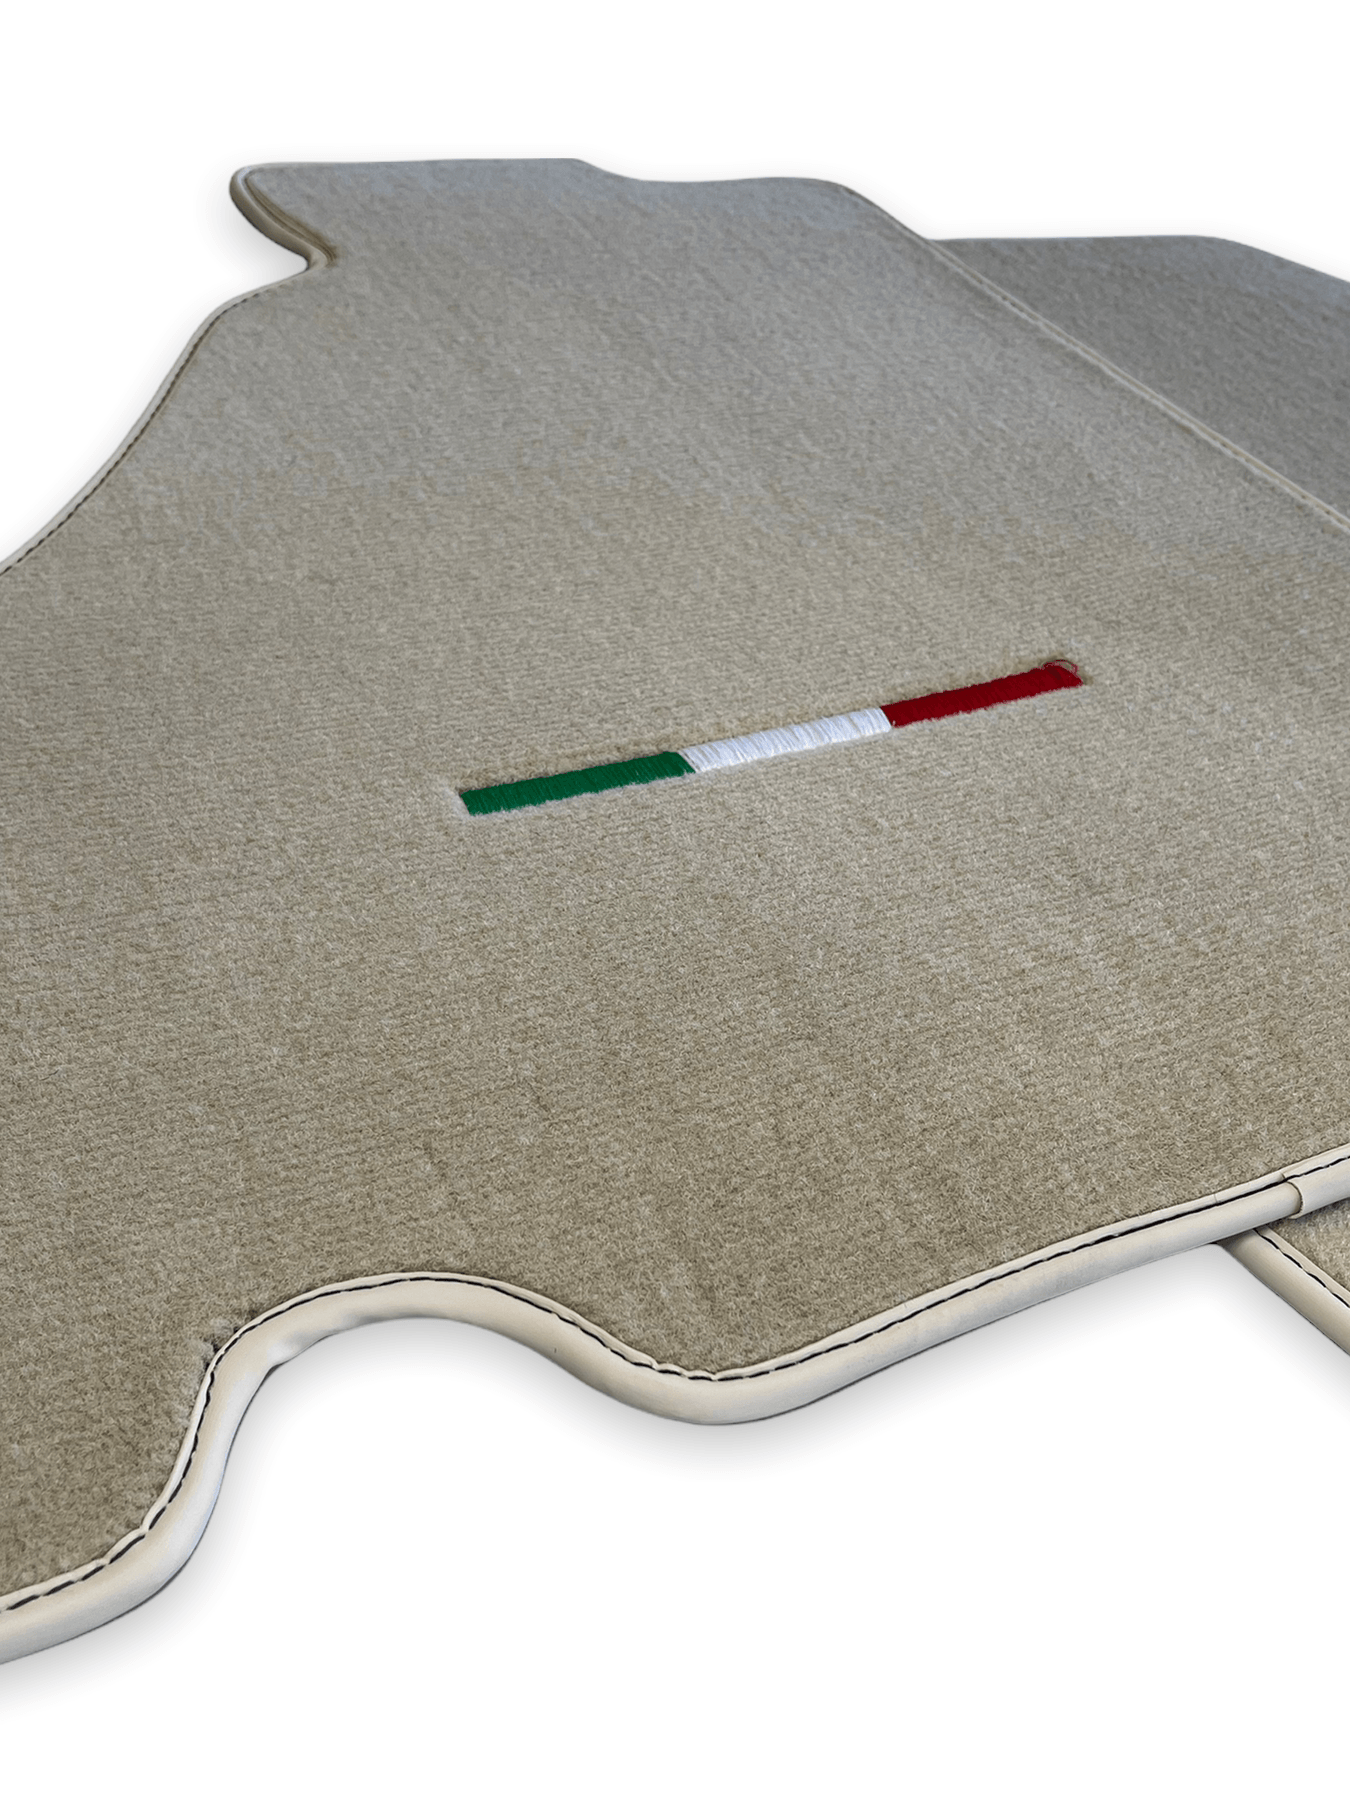 Floor Mats For Ferrari F430 2004-2009 Beige Color IT Edition - AutoWin